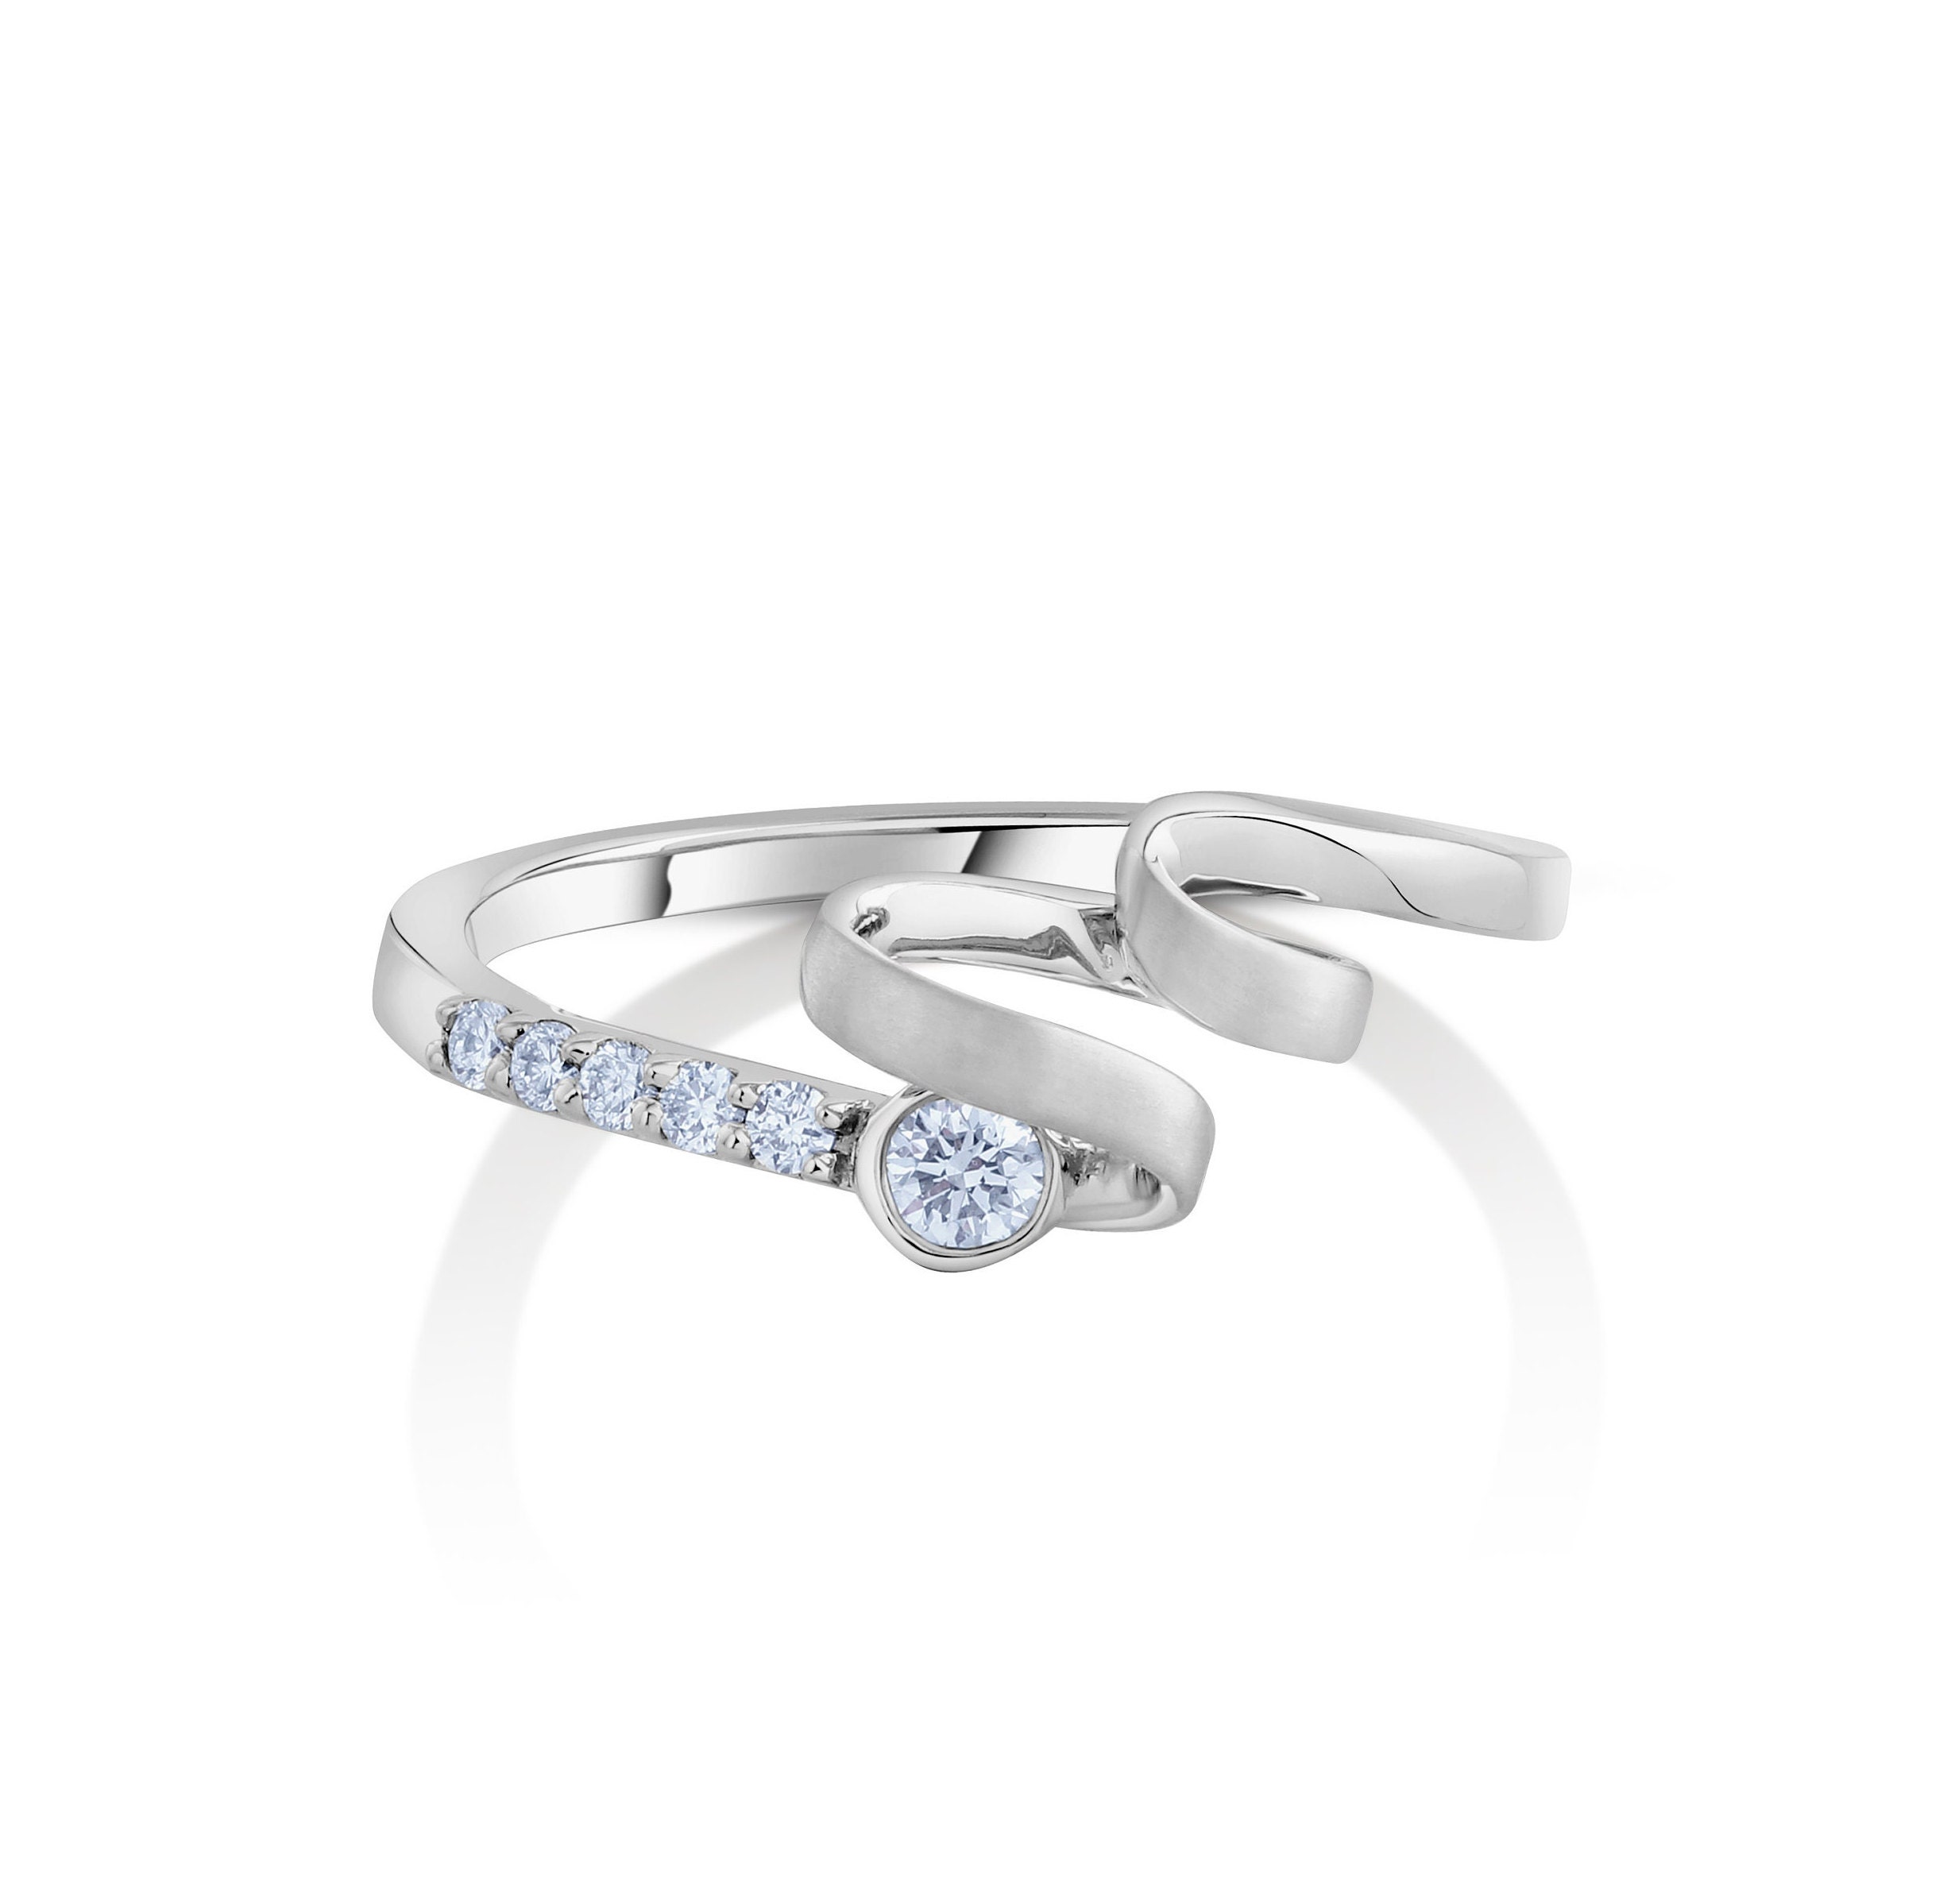 Buy Evara Platinum Diamond Ring for Women JL PT 1086 Online in India - Etsy